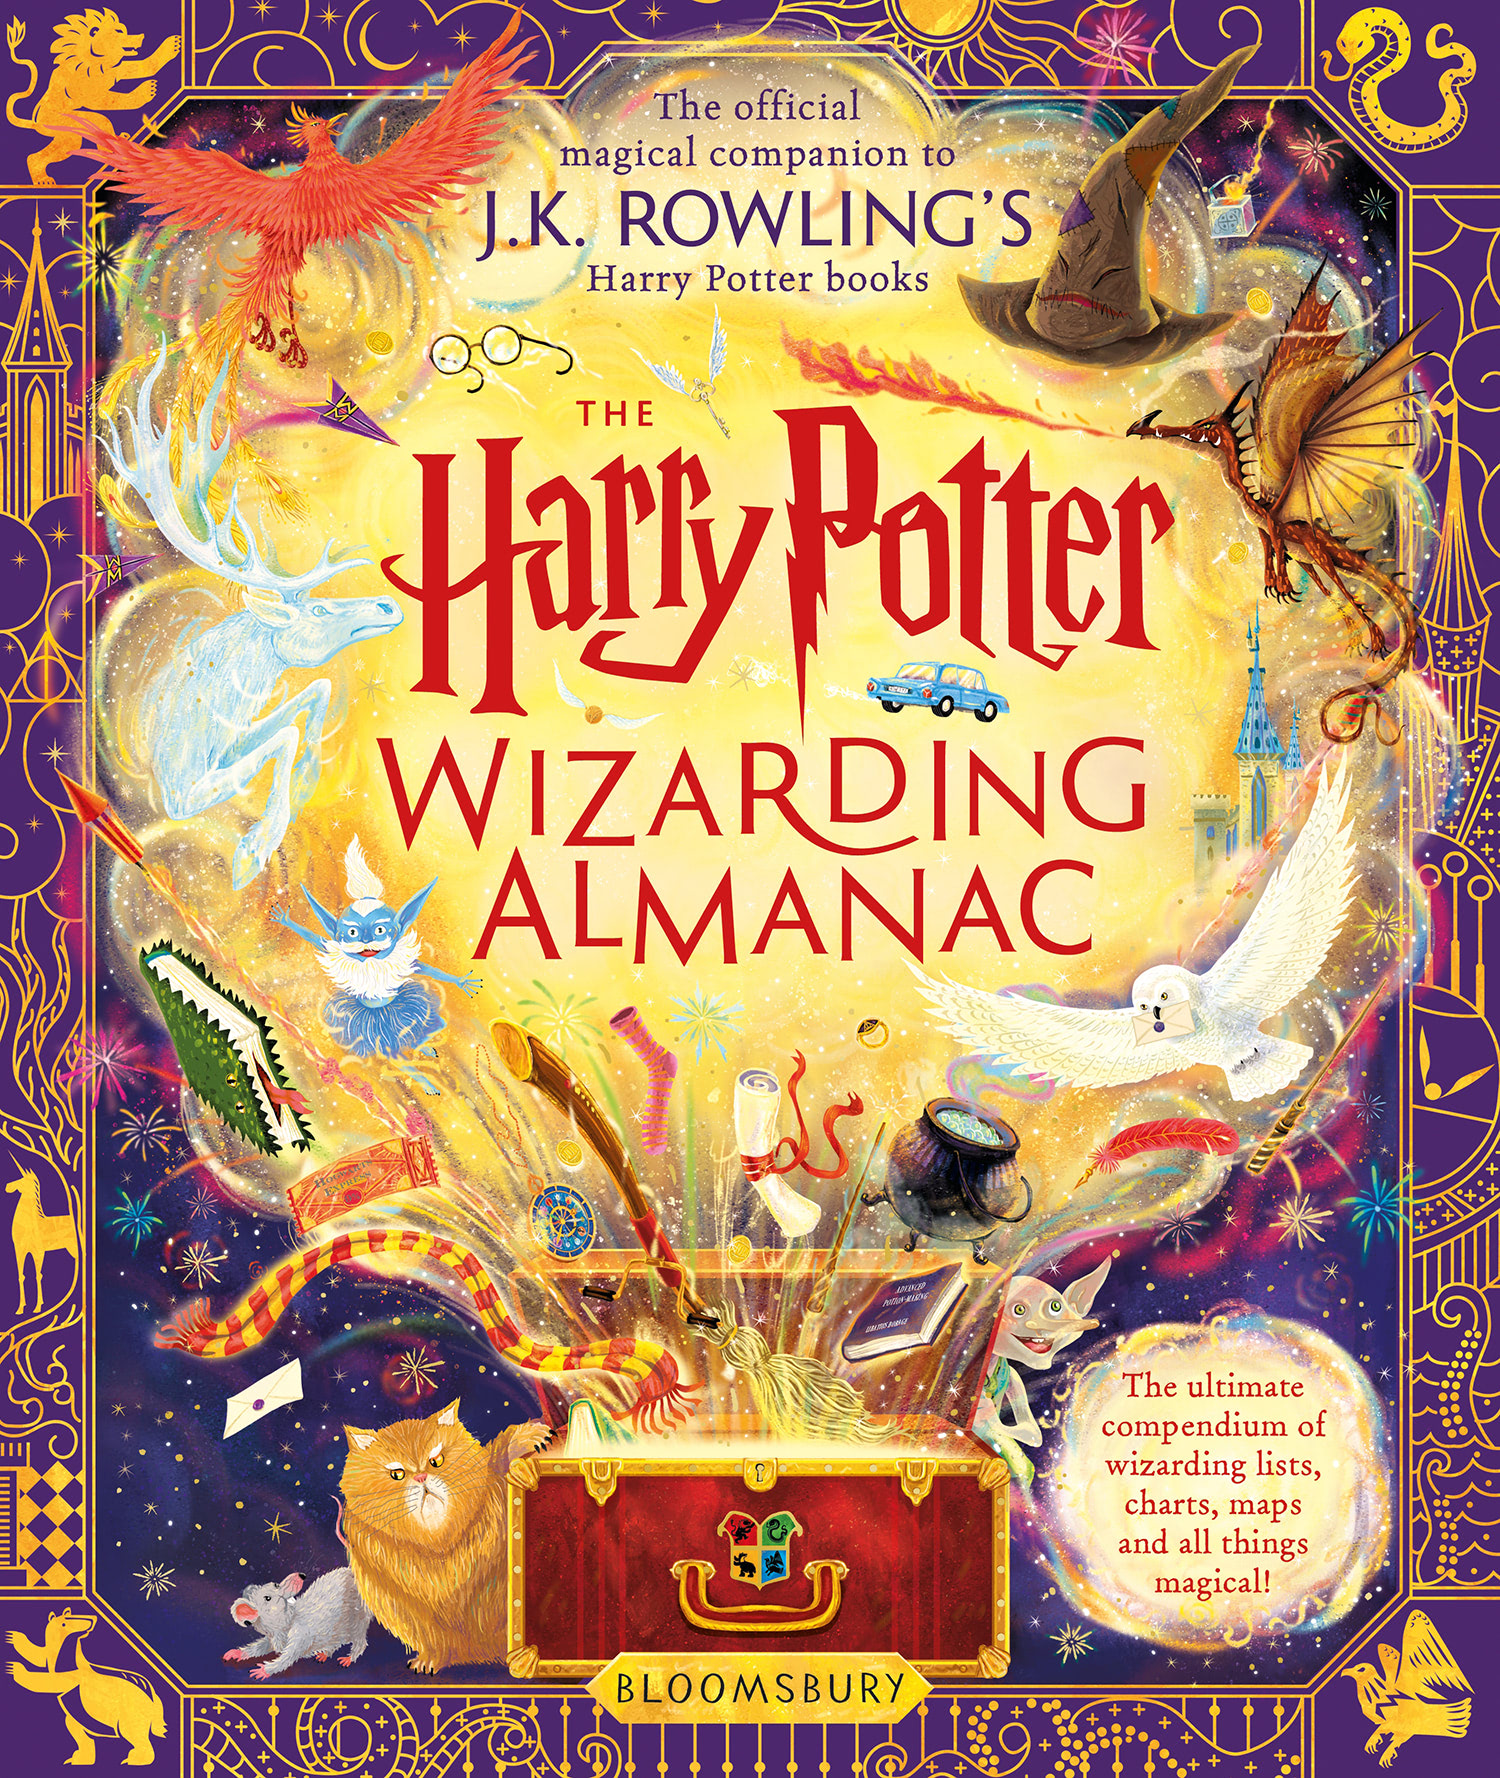 ‘The Harry Potter Wizarding Almanac’ book cover